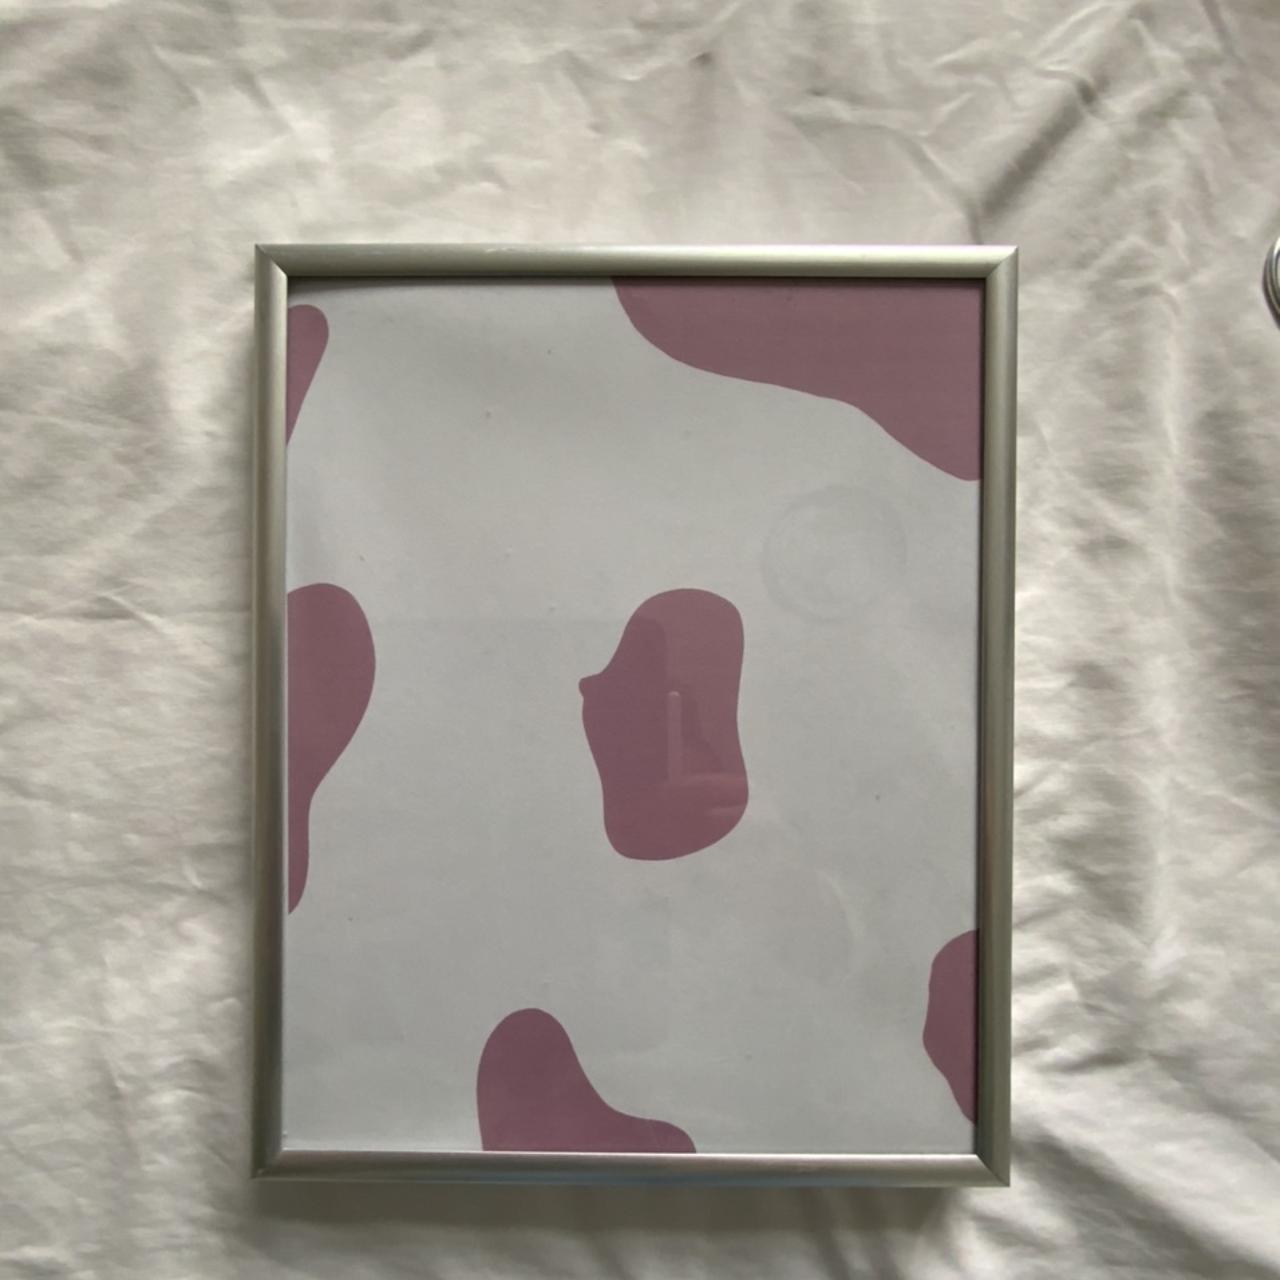 pastel purple cow print Picture Frame